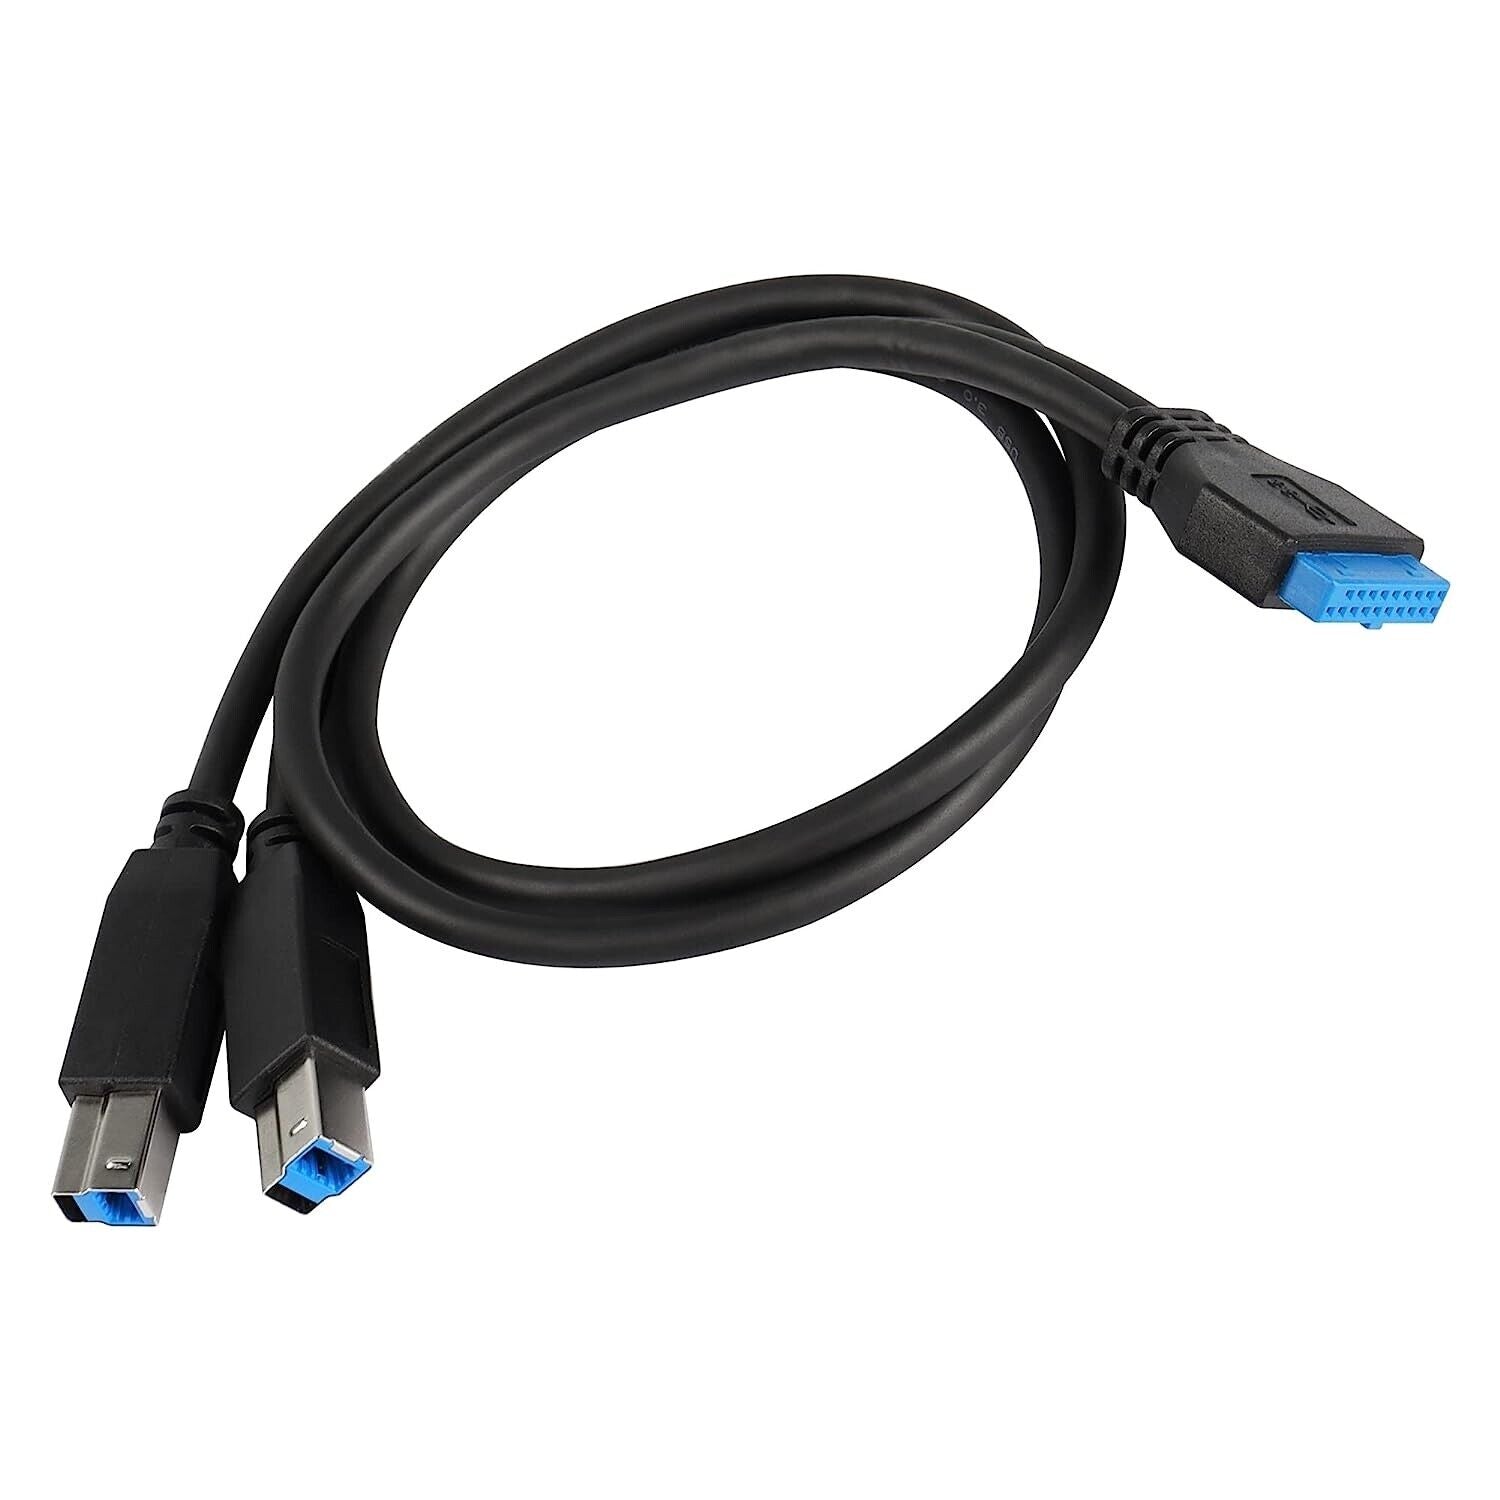 USB 3.0 19 Pin Female to Dual USB Type B Male Printer Splitter Cable